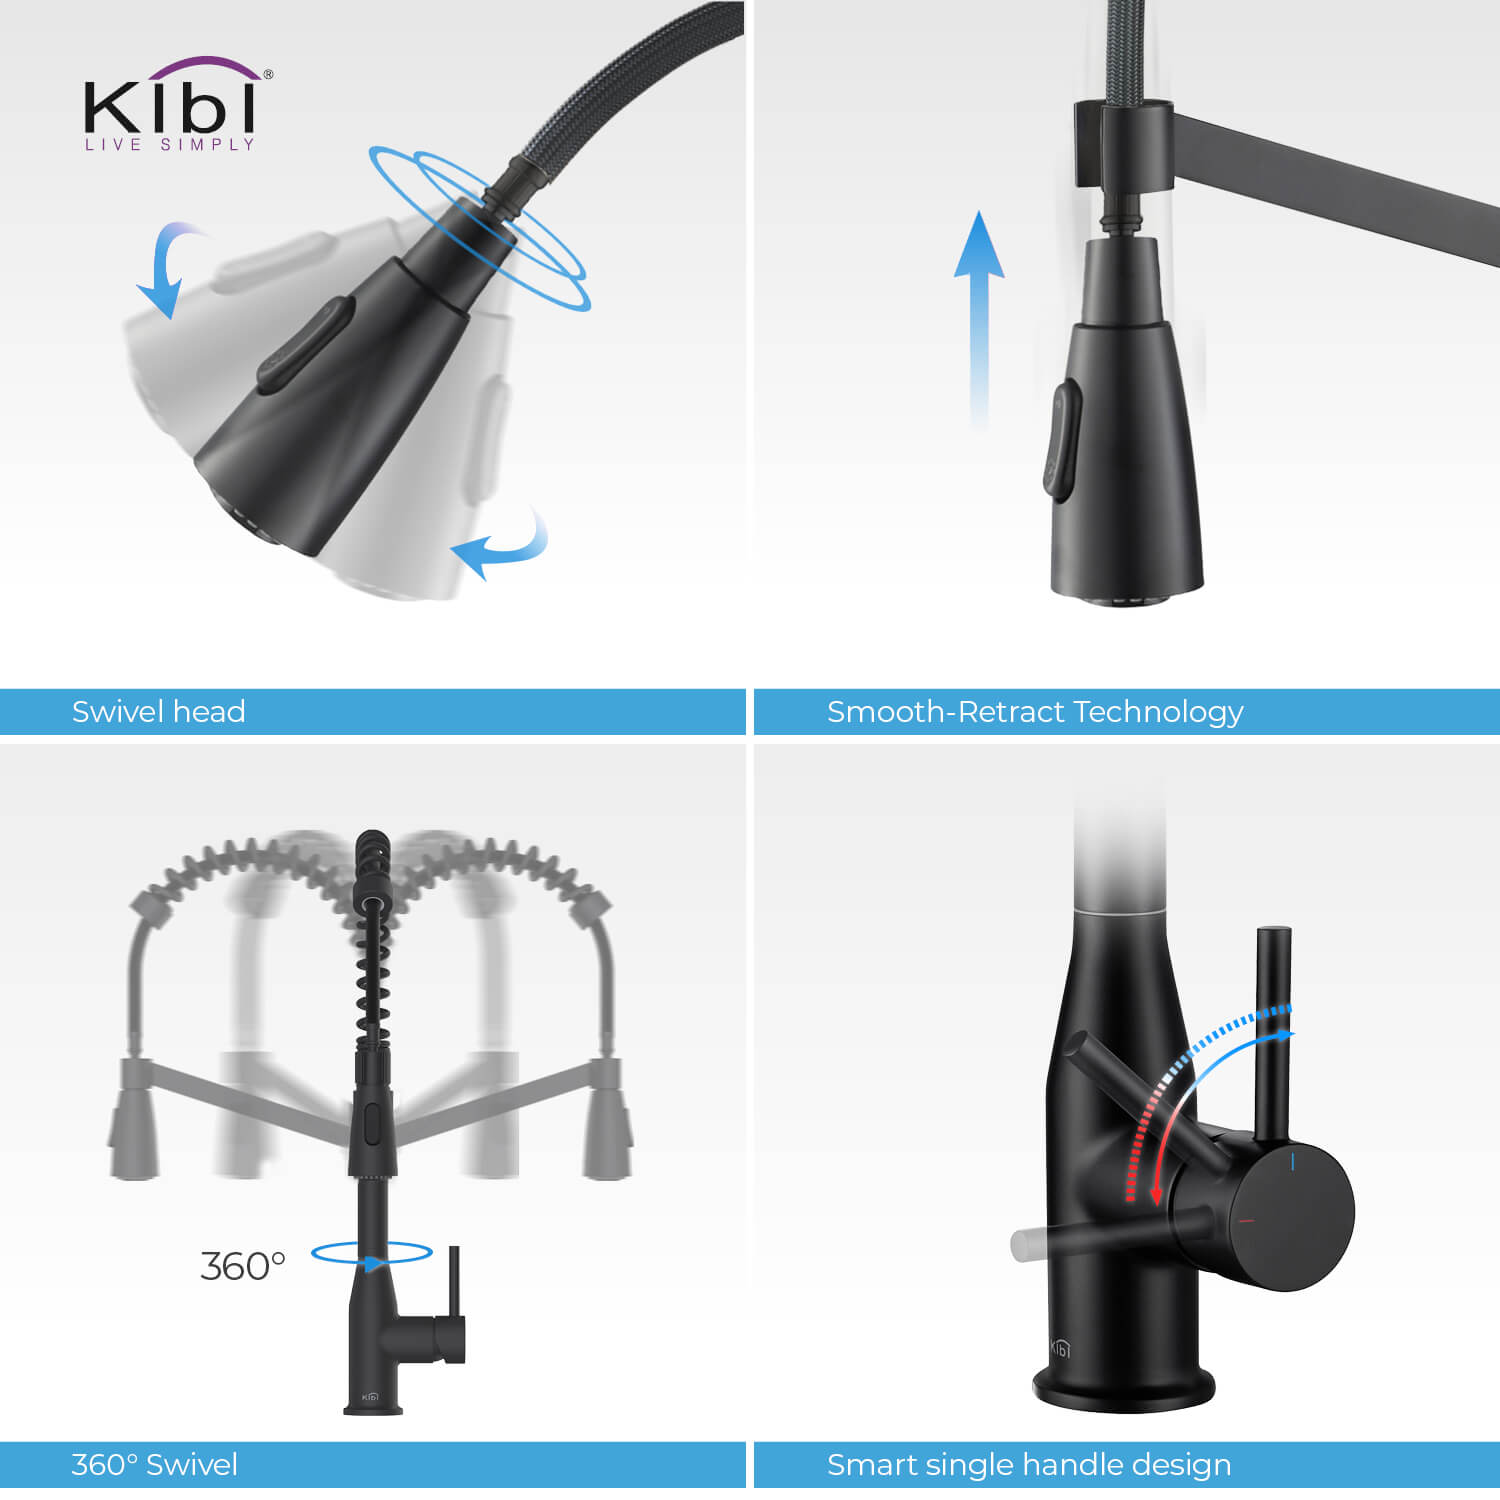 Kibi Largo Single Handle Pull Down Kitchen Faucet in Matte Black Finish